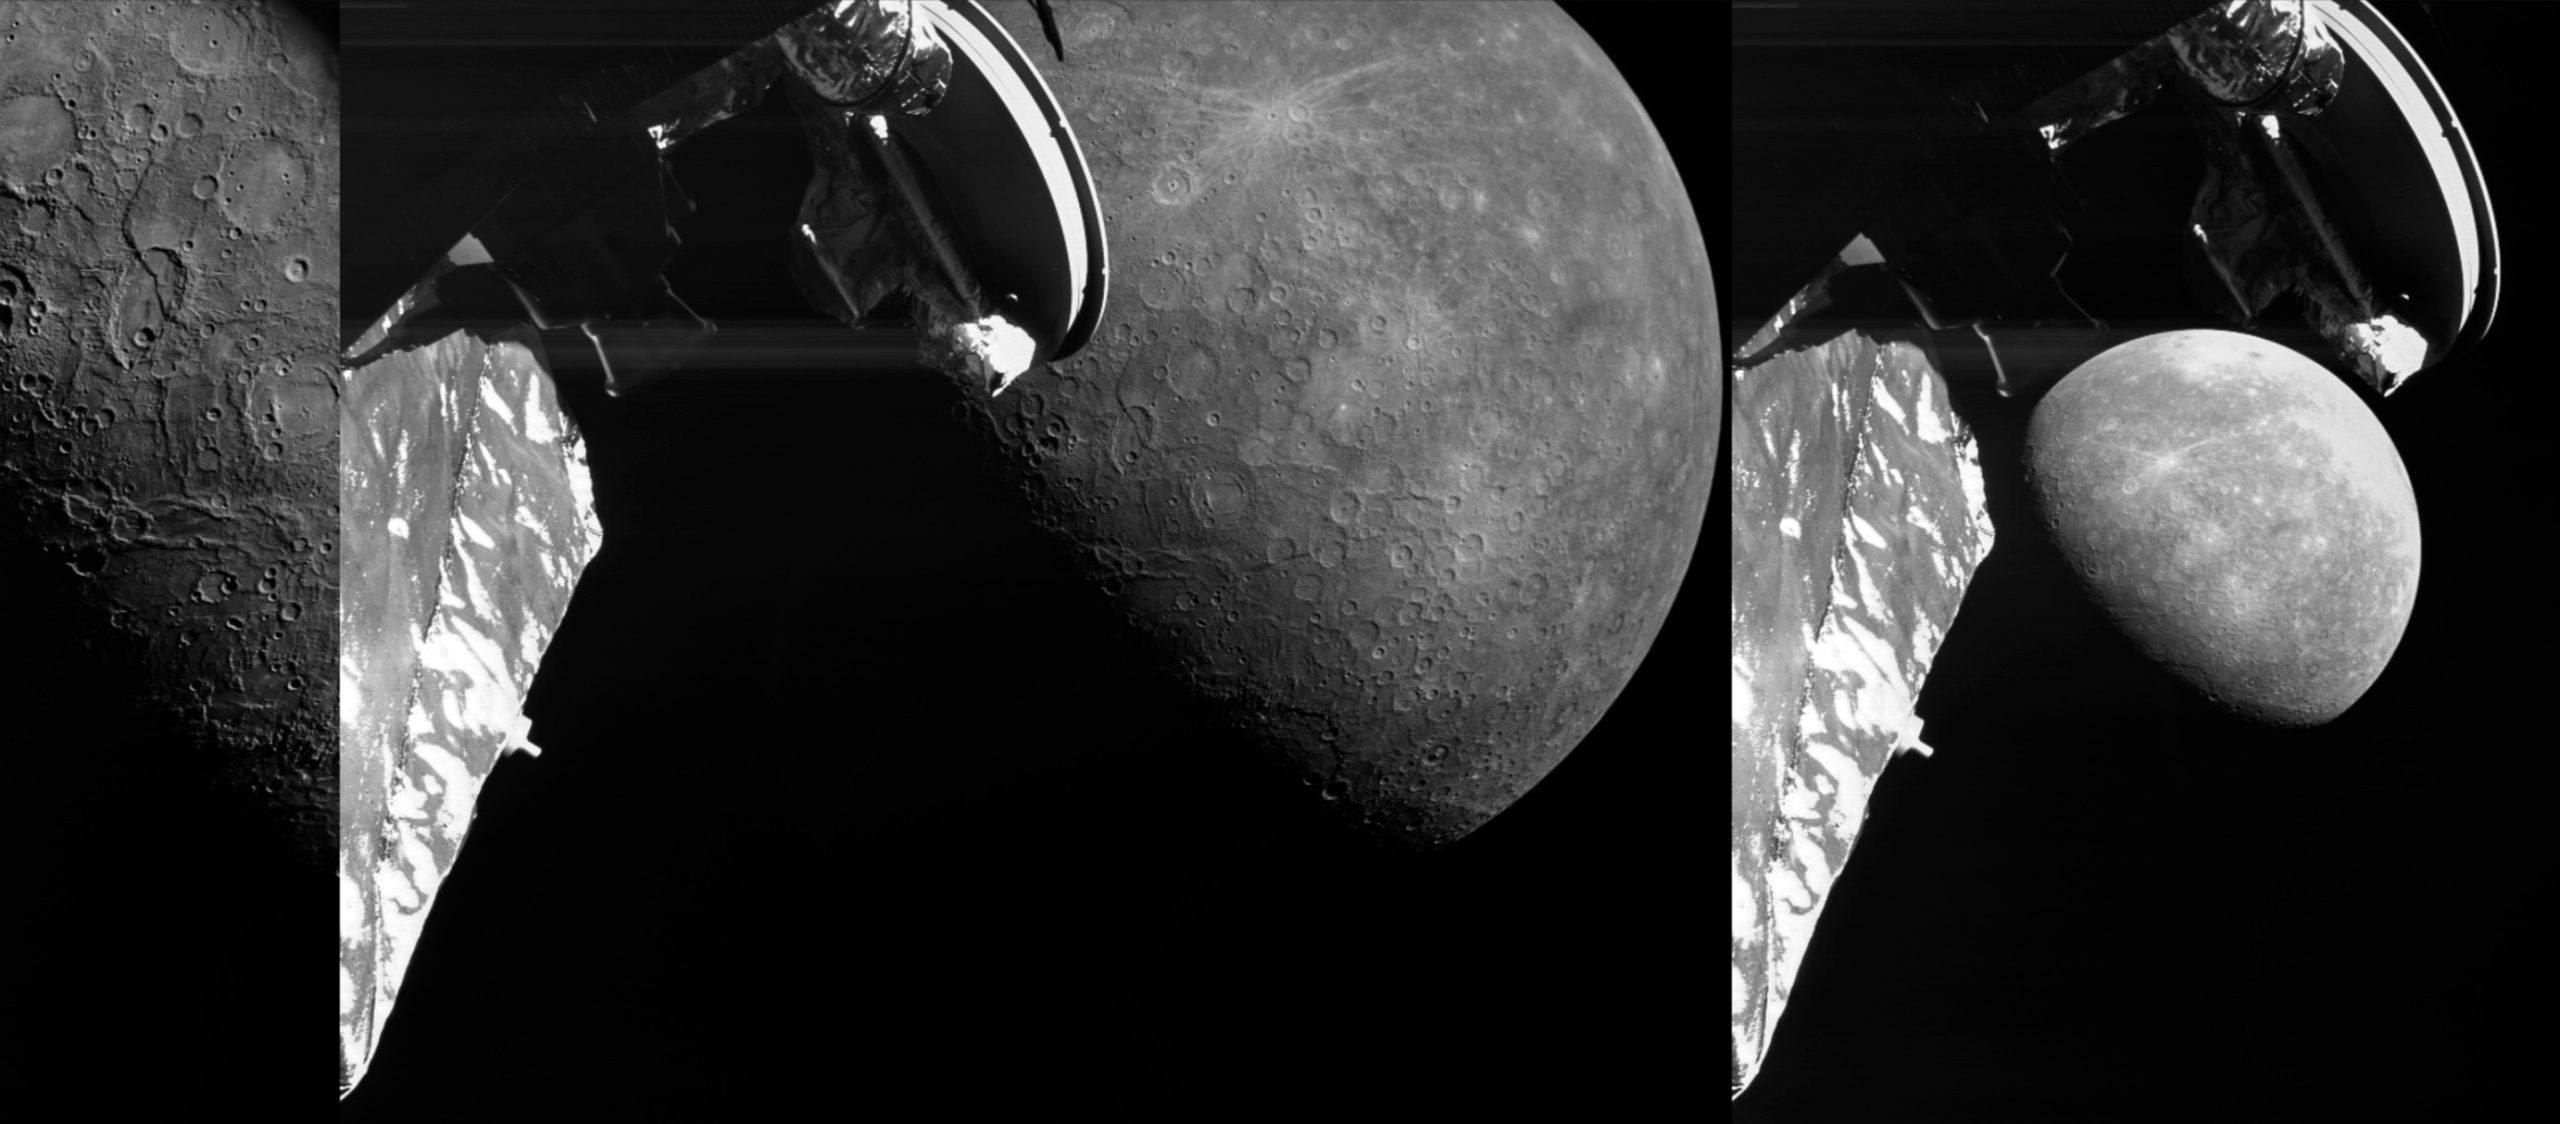 BepiColombo’s photographs of Mercury. Credit: ESA/BepiColombo/MTM, CC BY-SA 3.0 IGO.